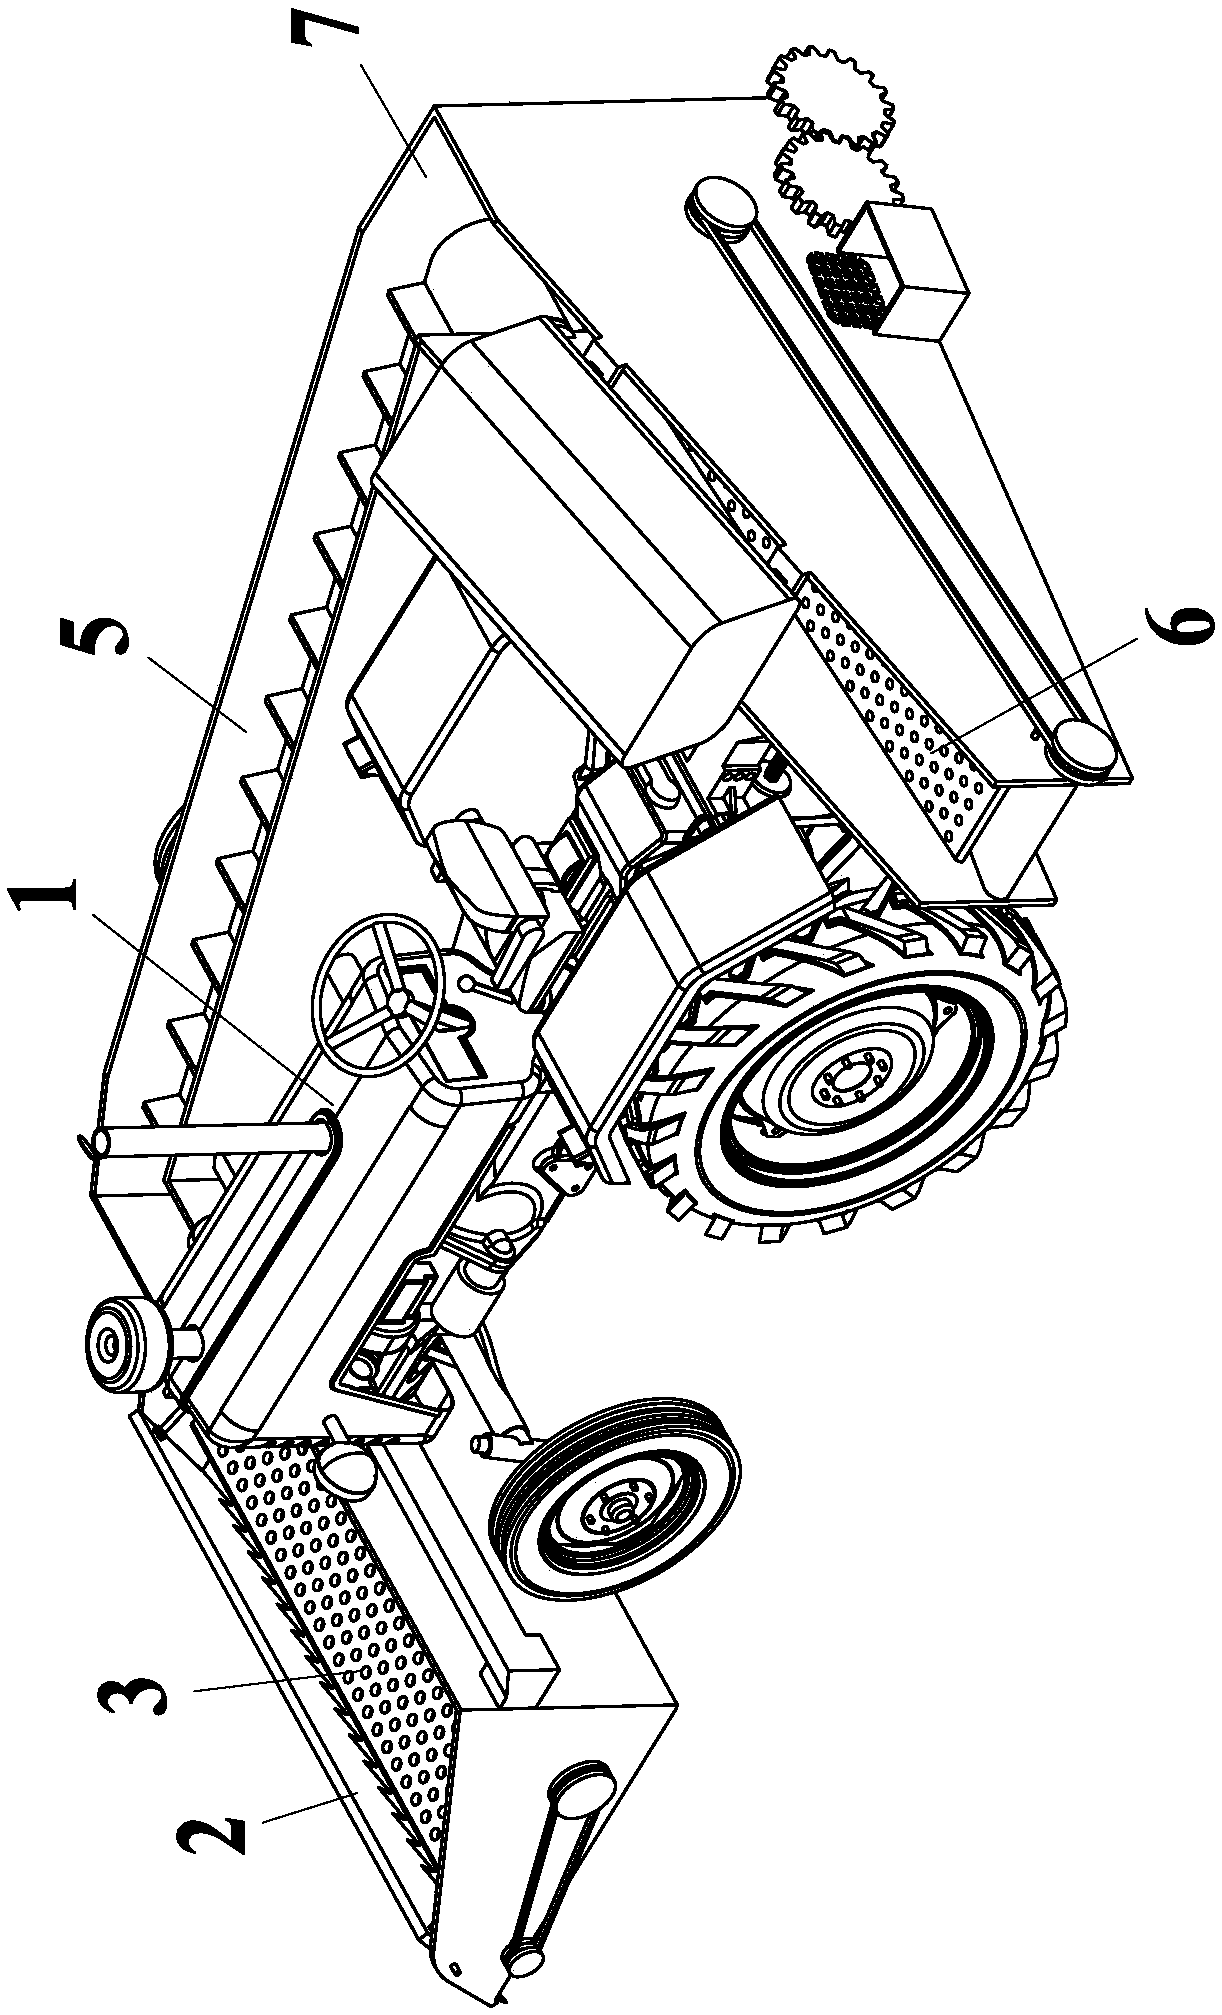 An automatic soil notoginseng harvester